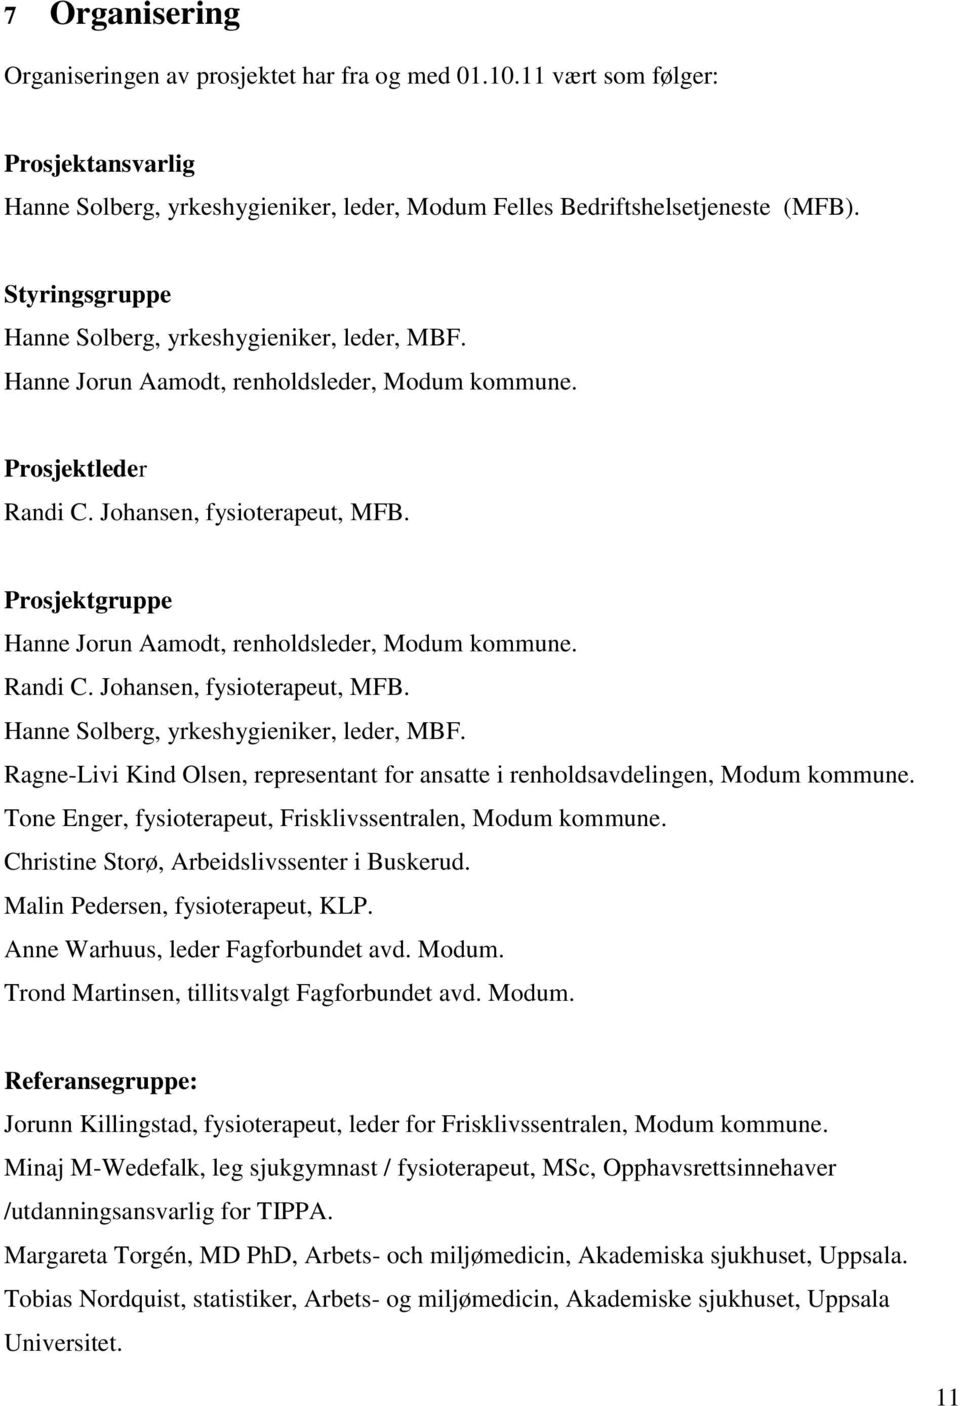 Prosjektgruppe Hanne Jorun Aamodt, renholdsleder, Modum kommune. Randi C. Johansen, fysioterapeut, MFB. Hanne Solberg, yrkeshygieniker, leder, MBF.